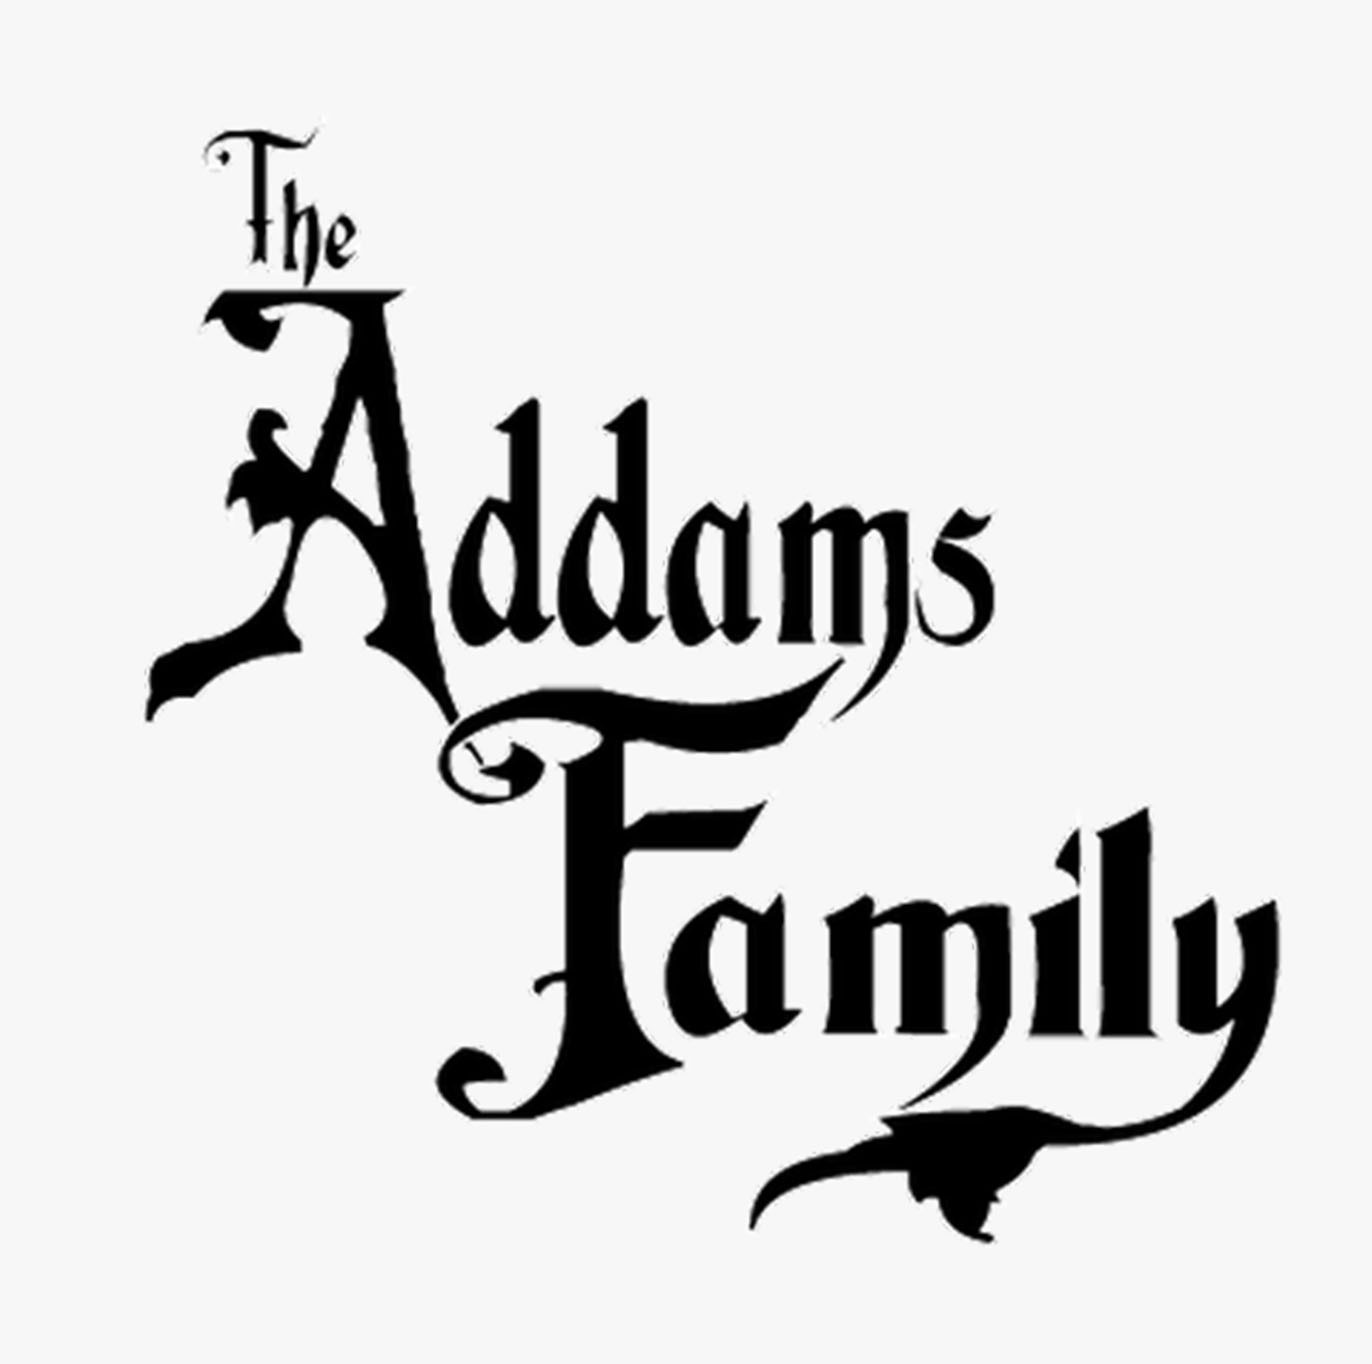 Tha Addams Family